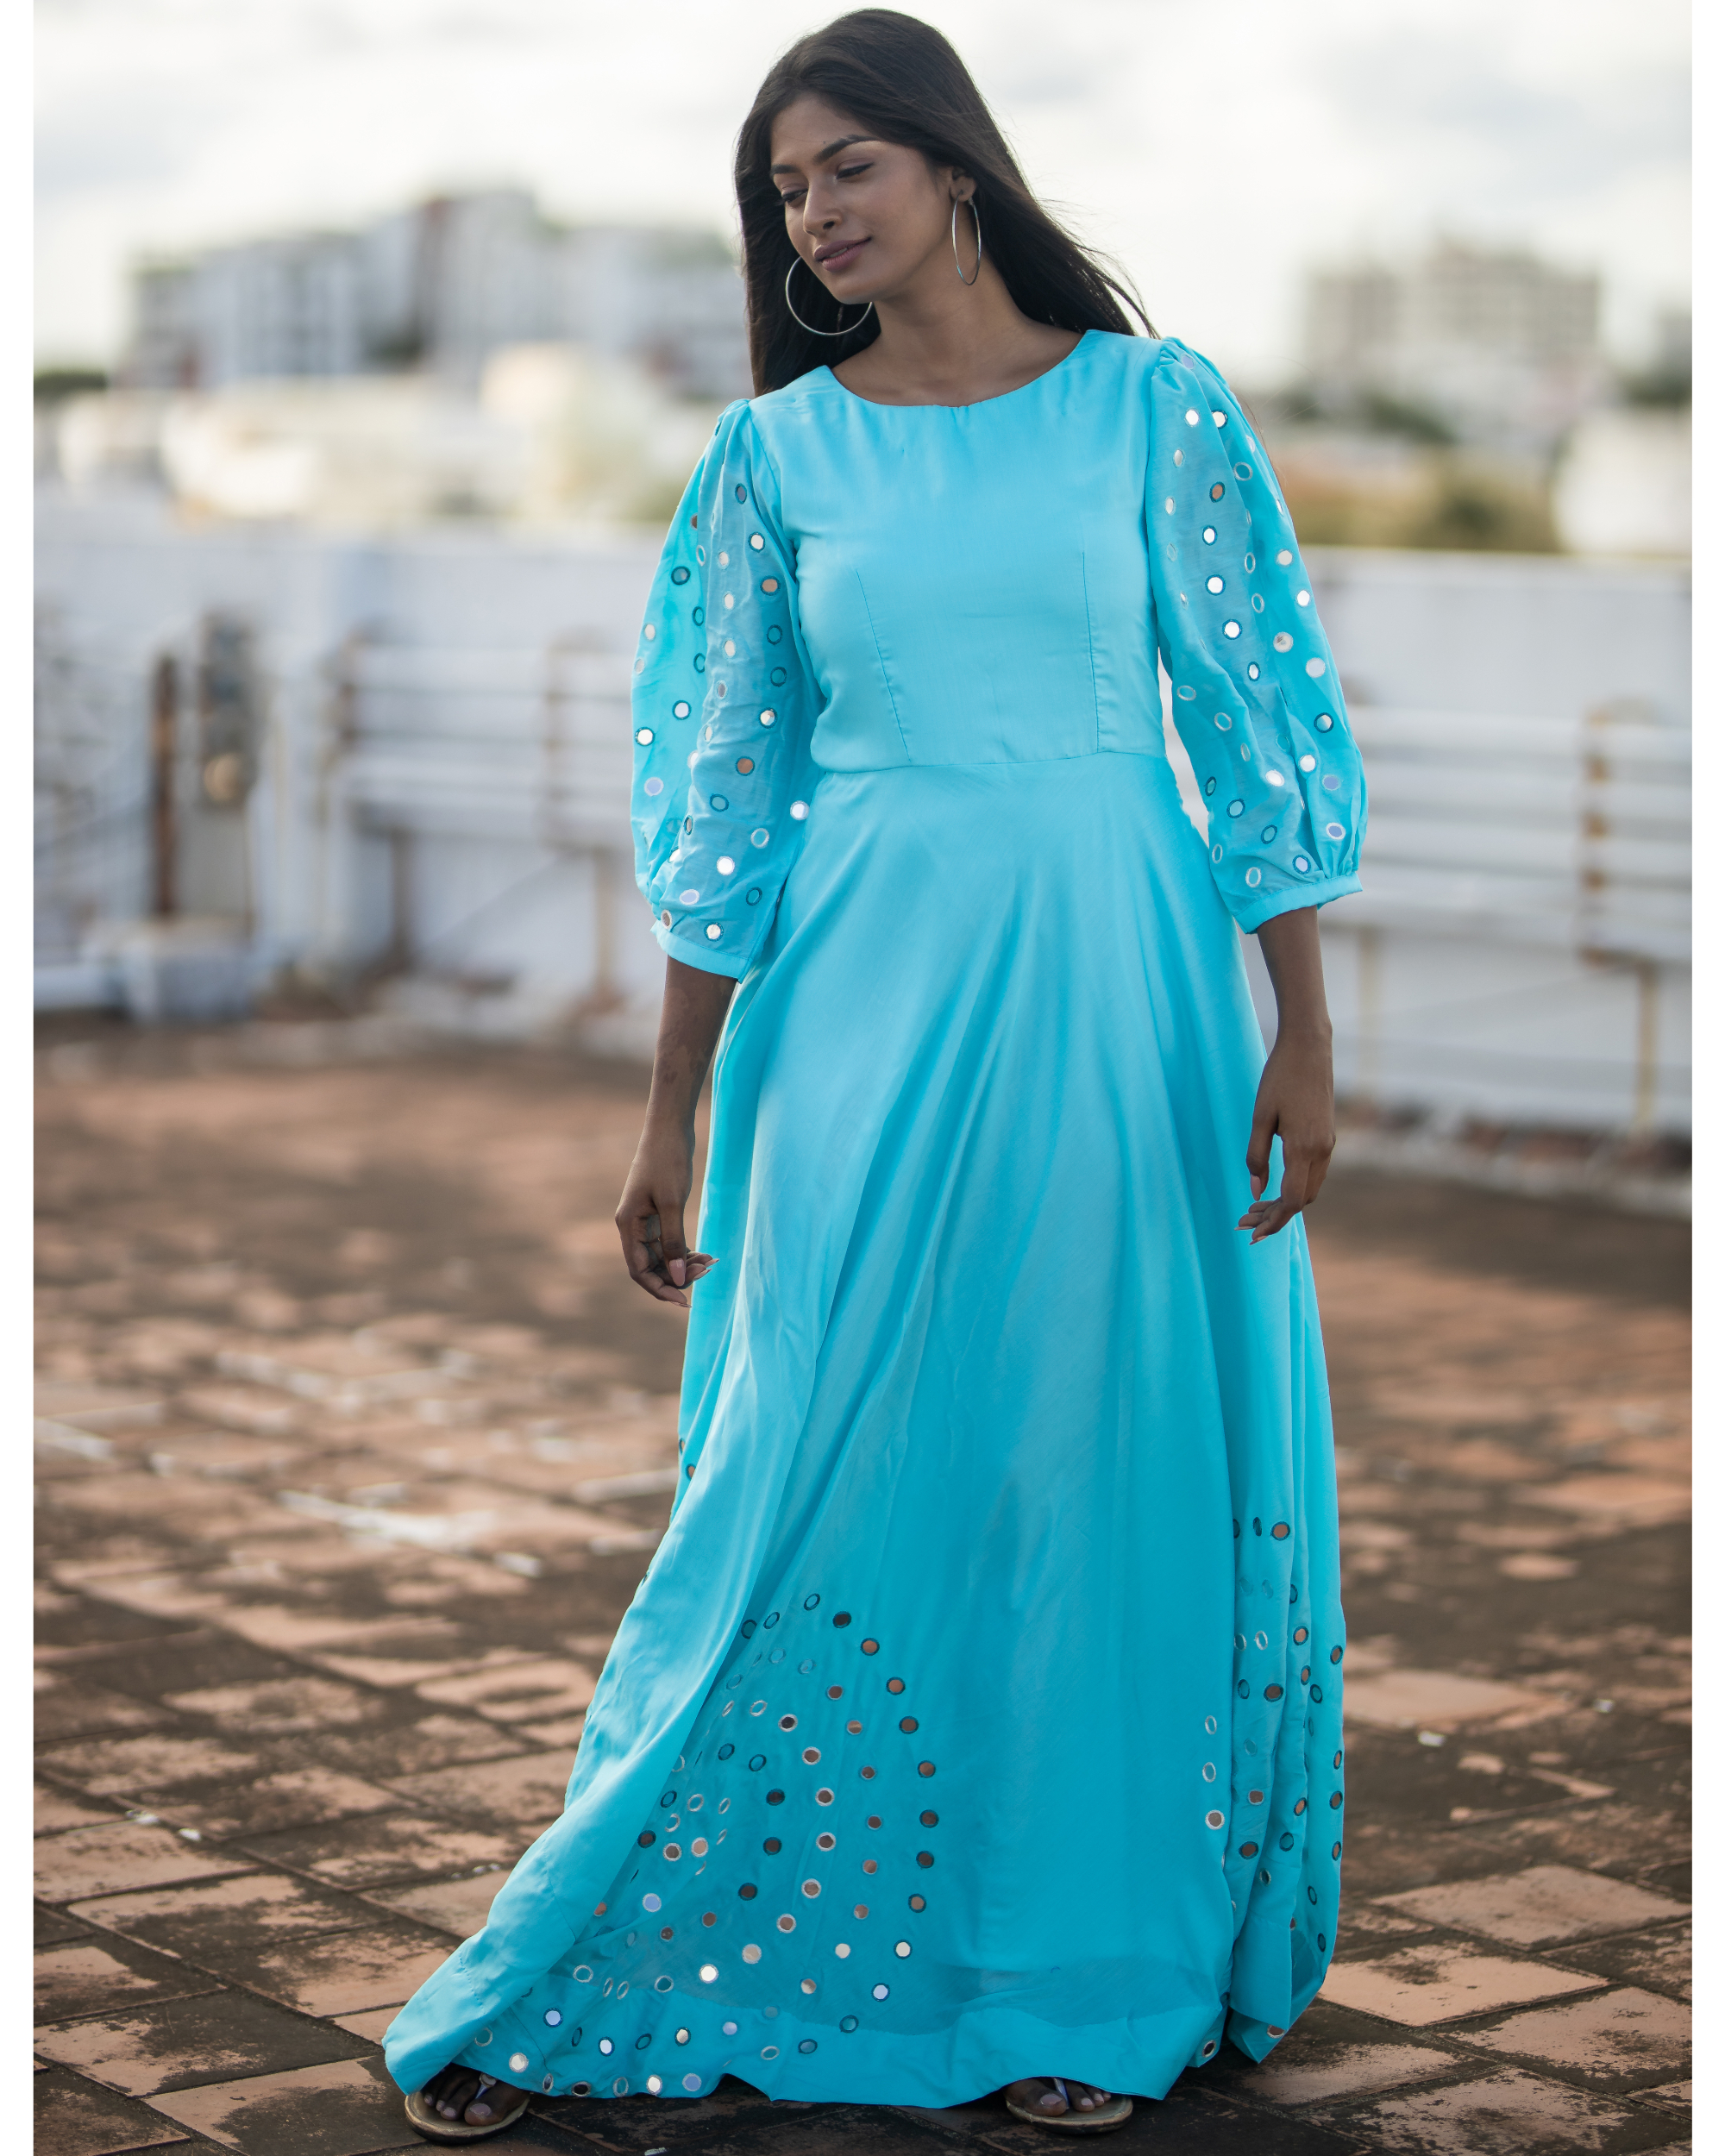 Sky blue flared dress by Kundavai